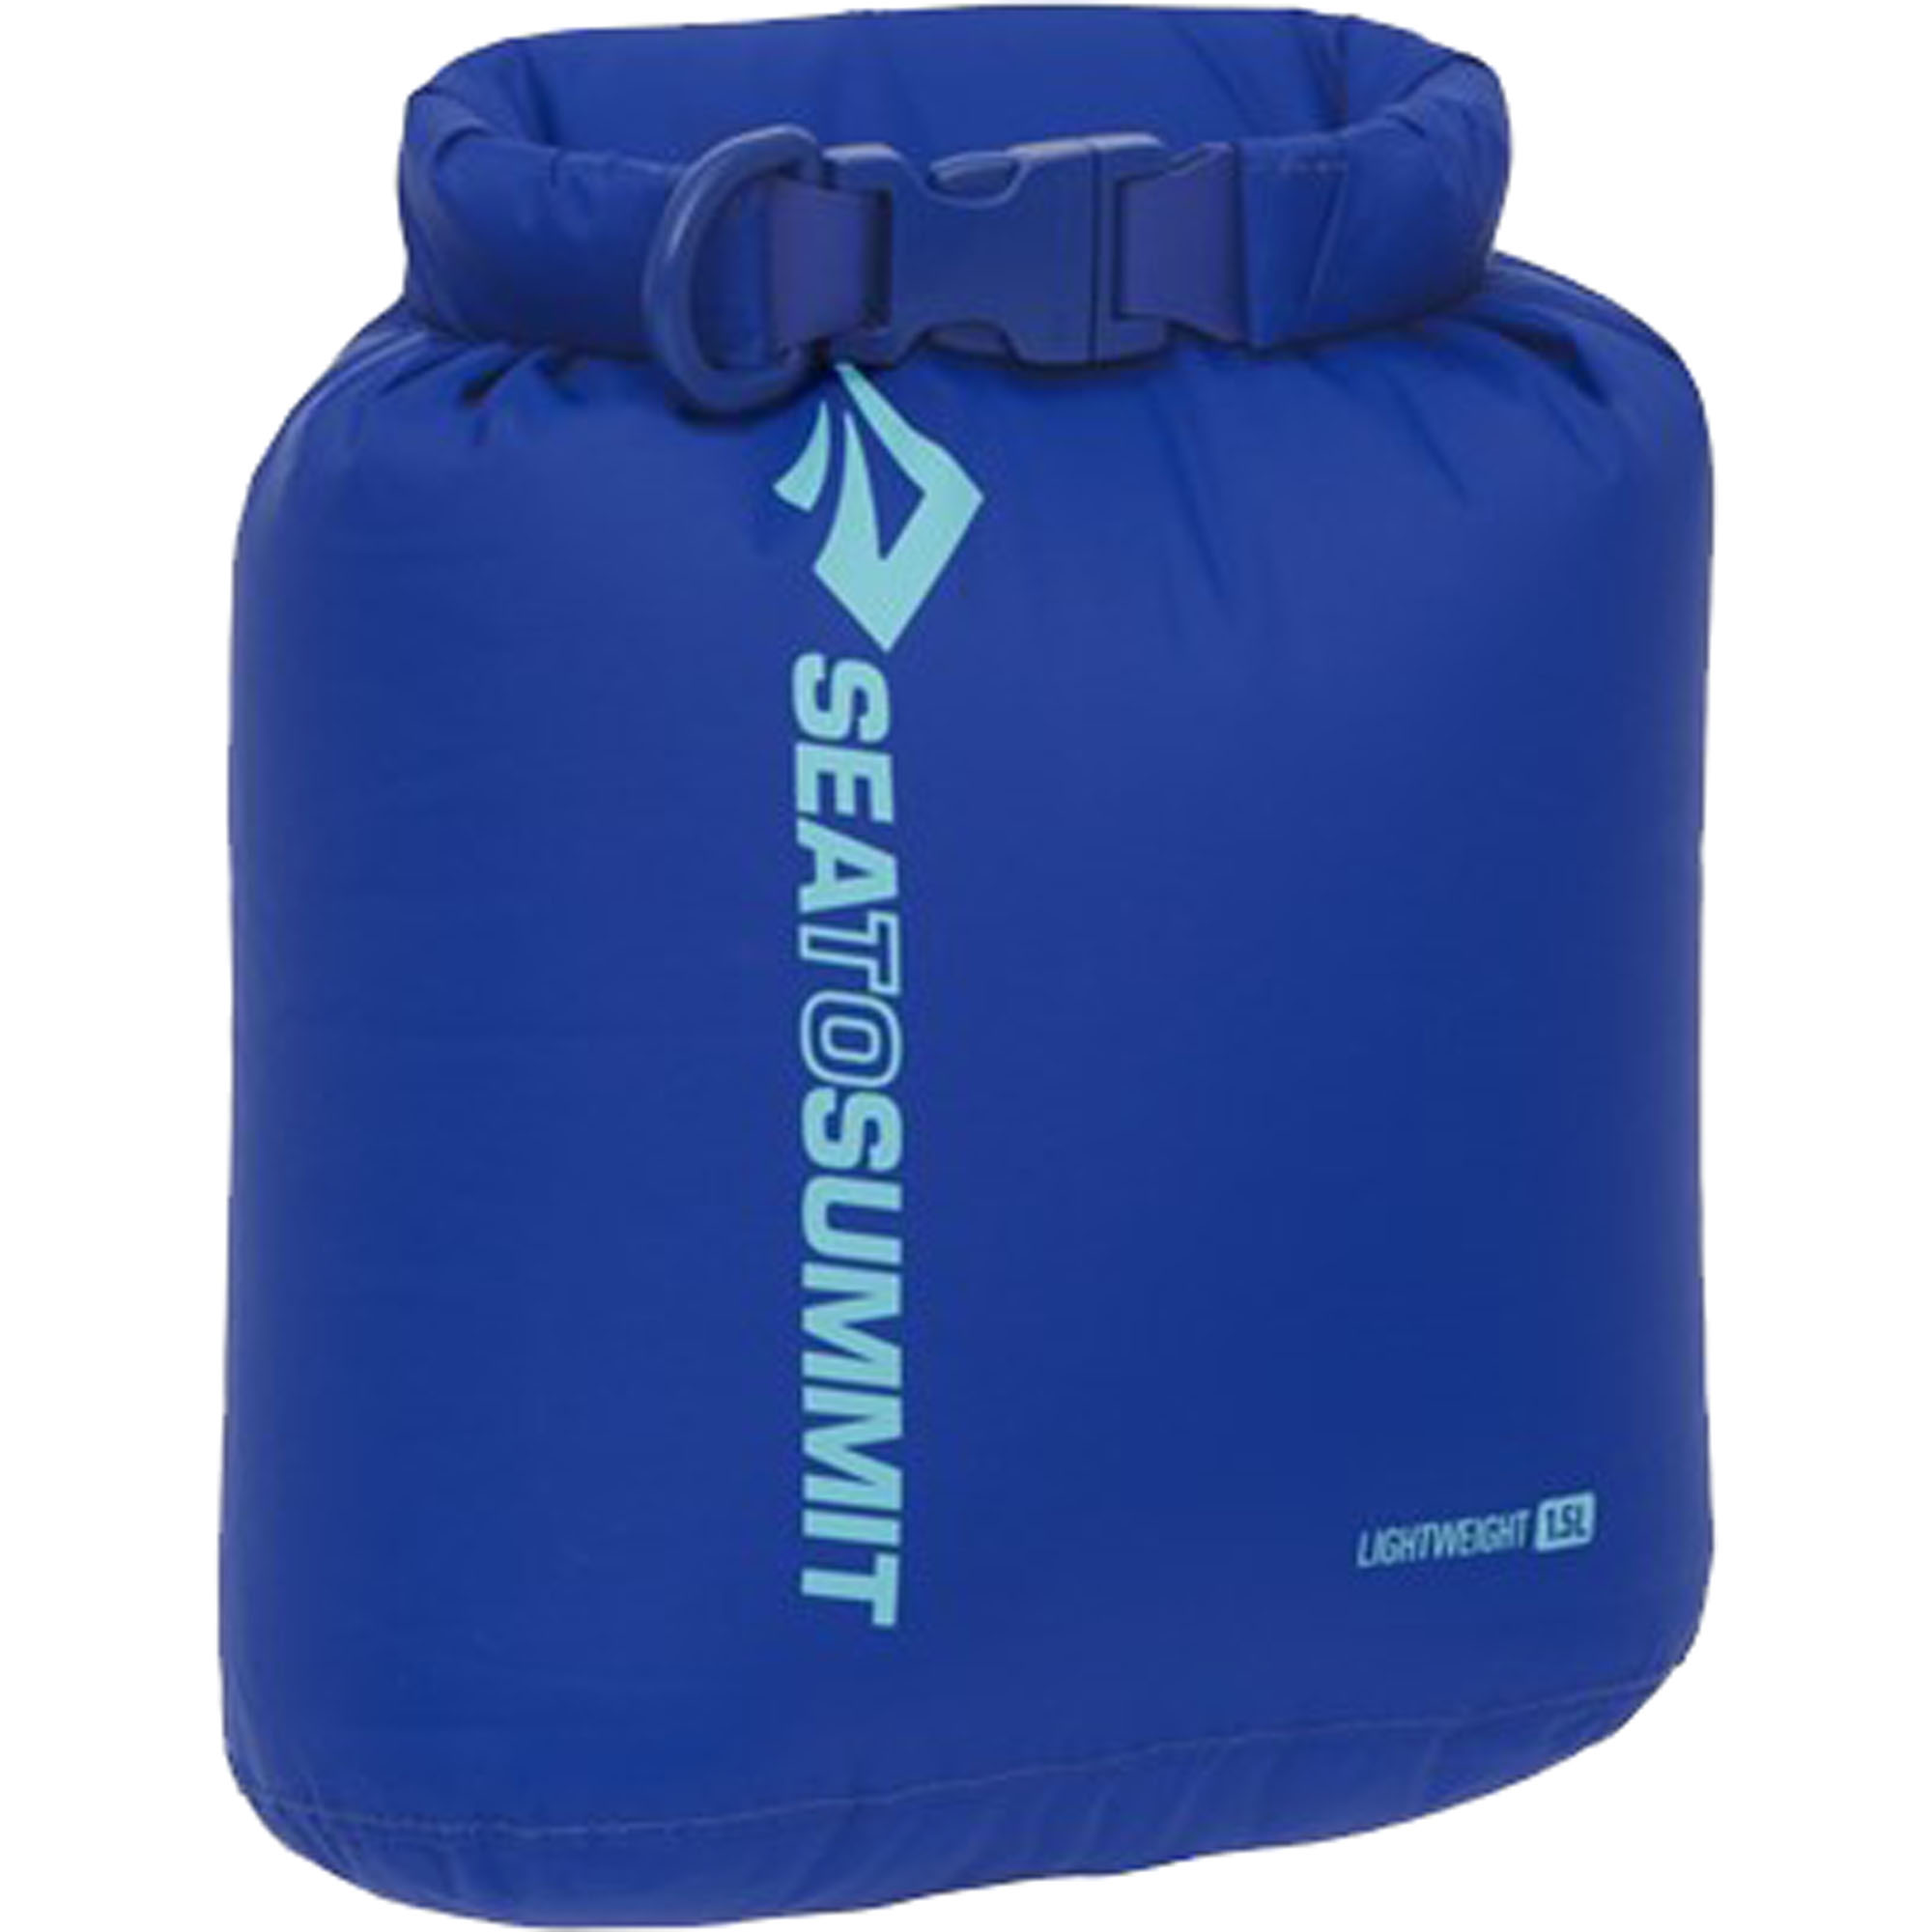 Sea to Summit Lightweight Dry Bag 1.5L Waterproof Gear Sack